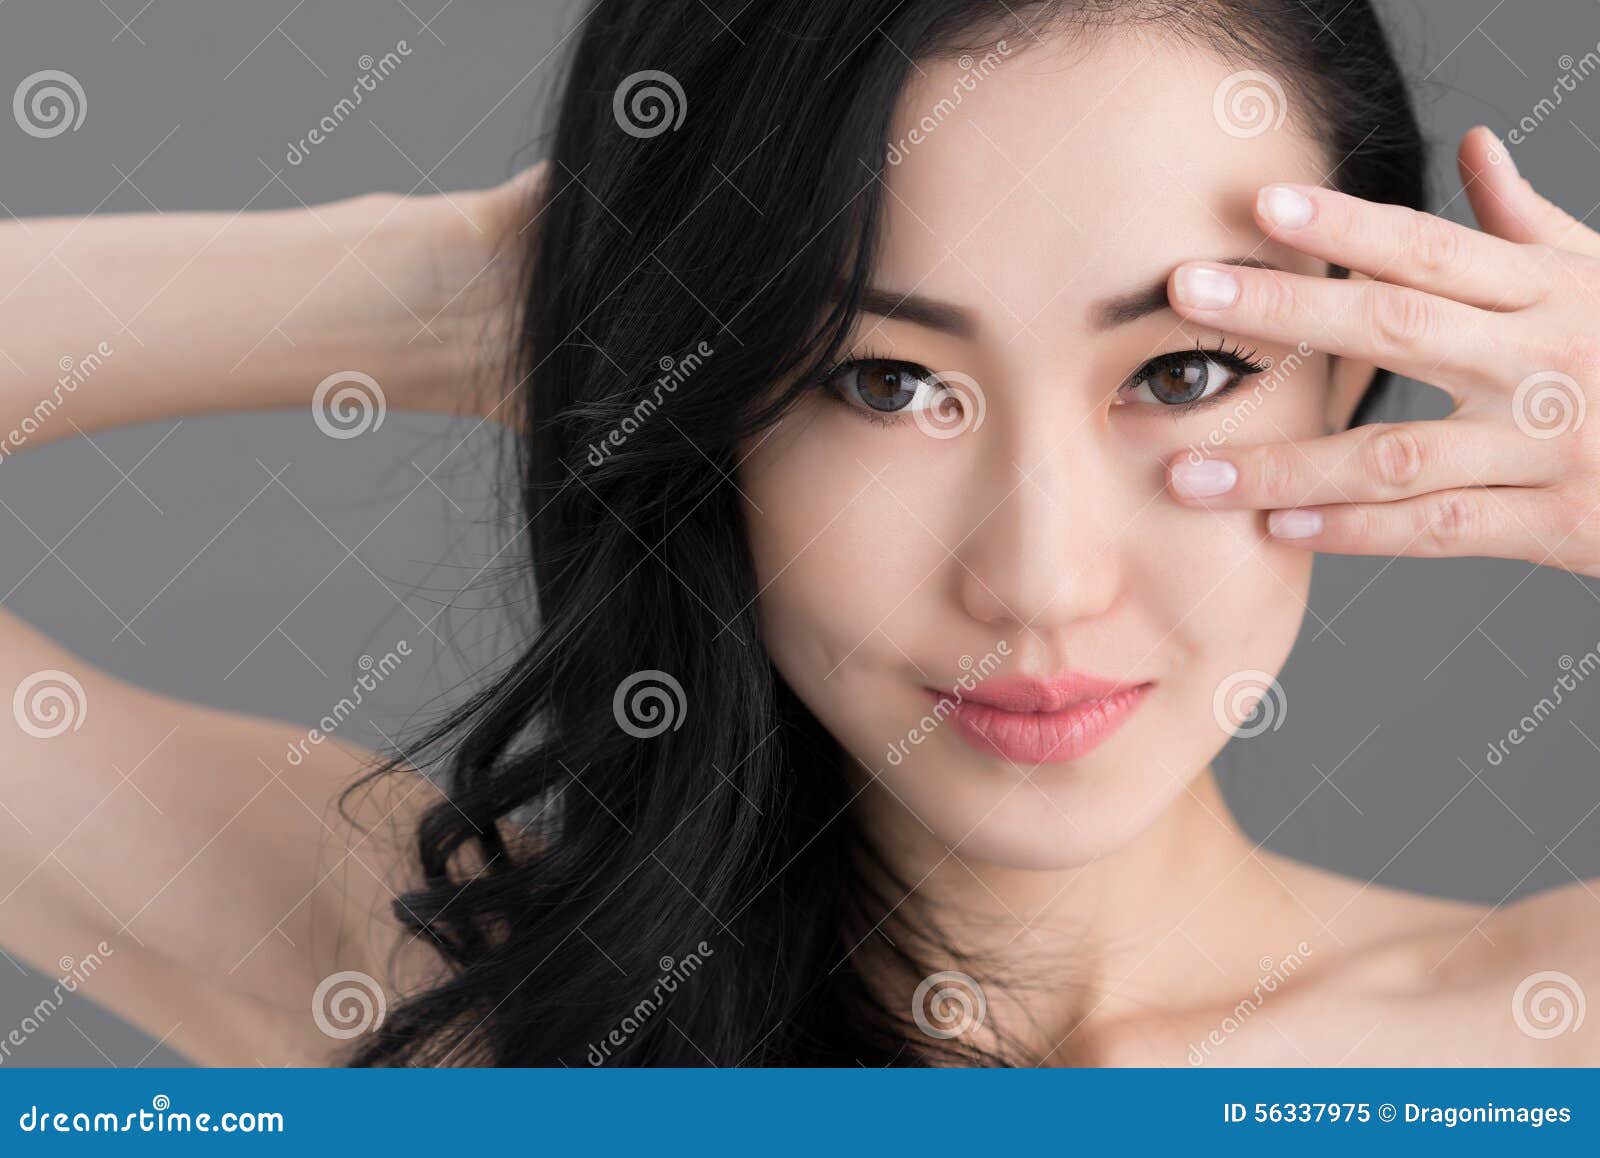 https://thumbs.dreamstime.com/z/gorgeous-young-woman-close-up-portrait-clean-fresh-skin-56337975.jpg